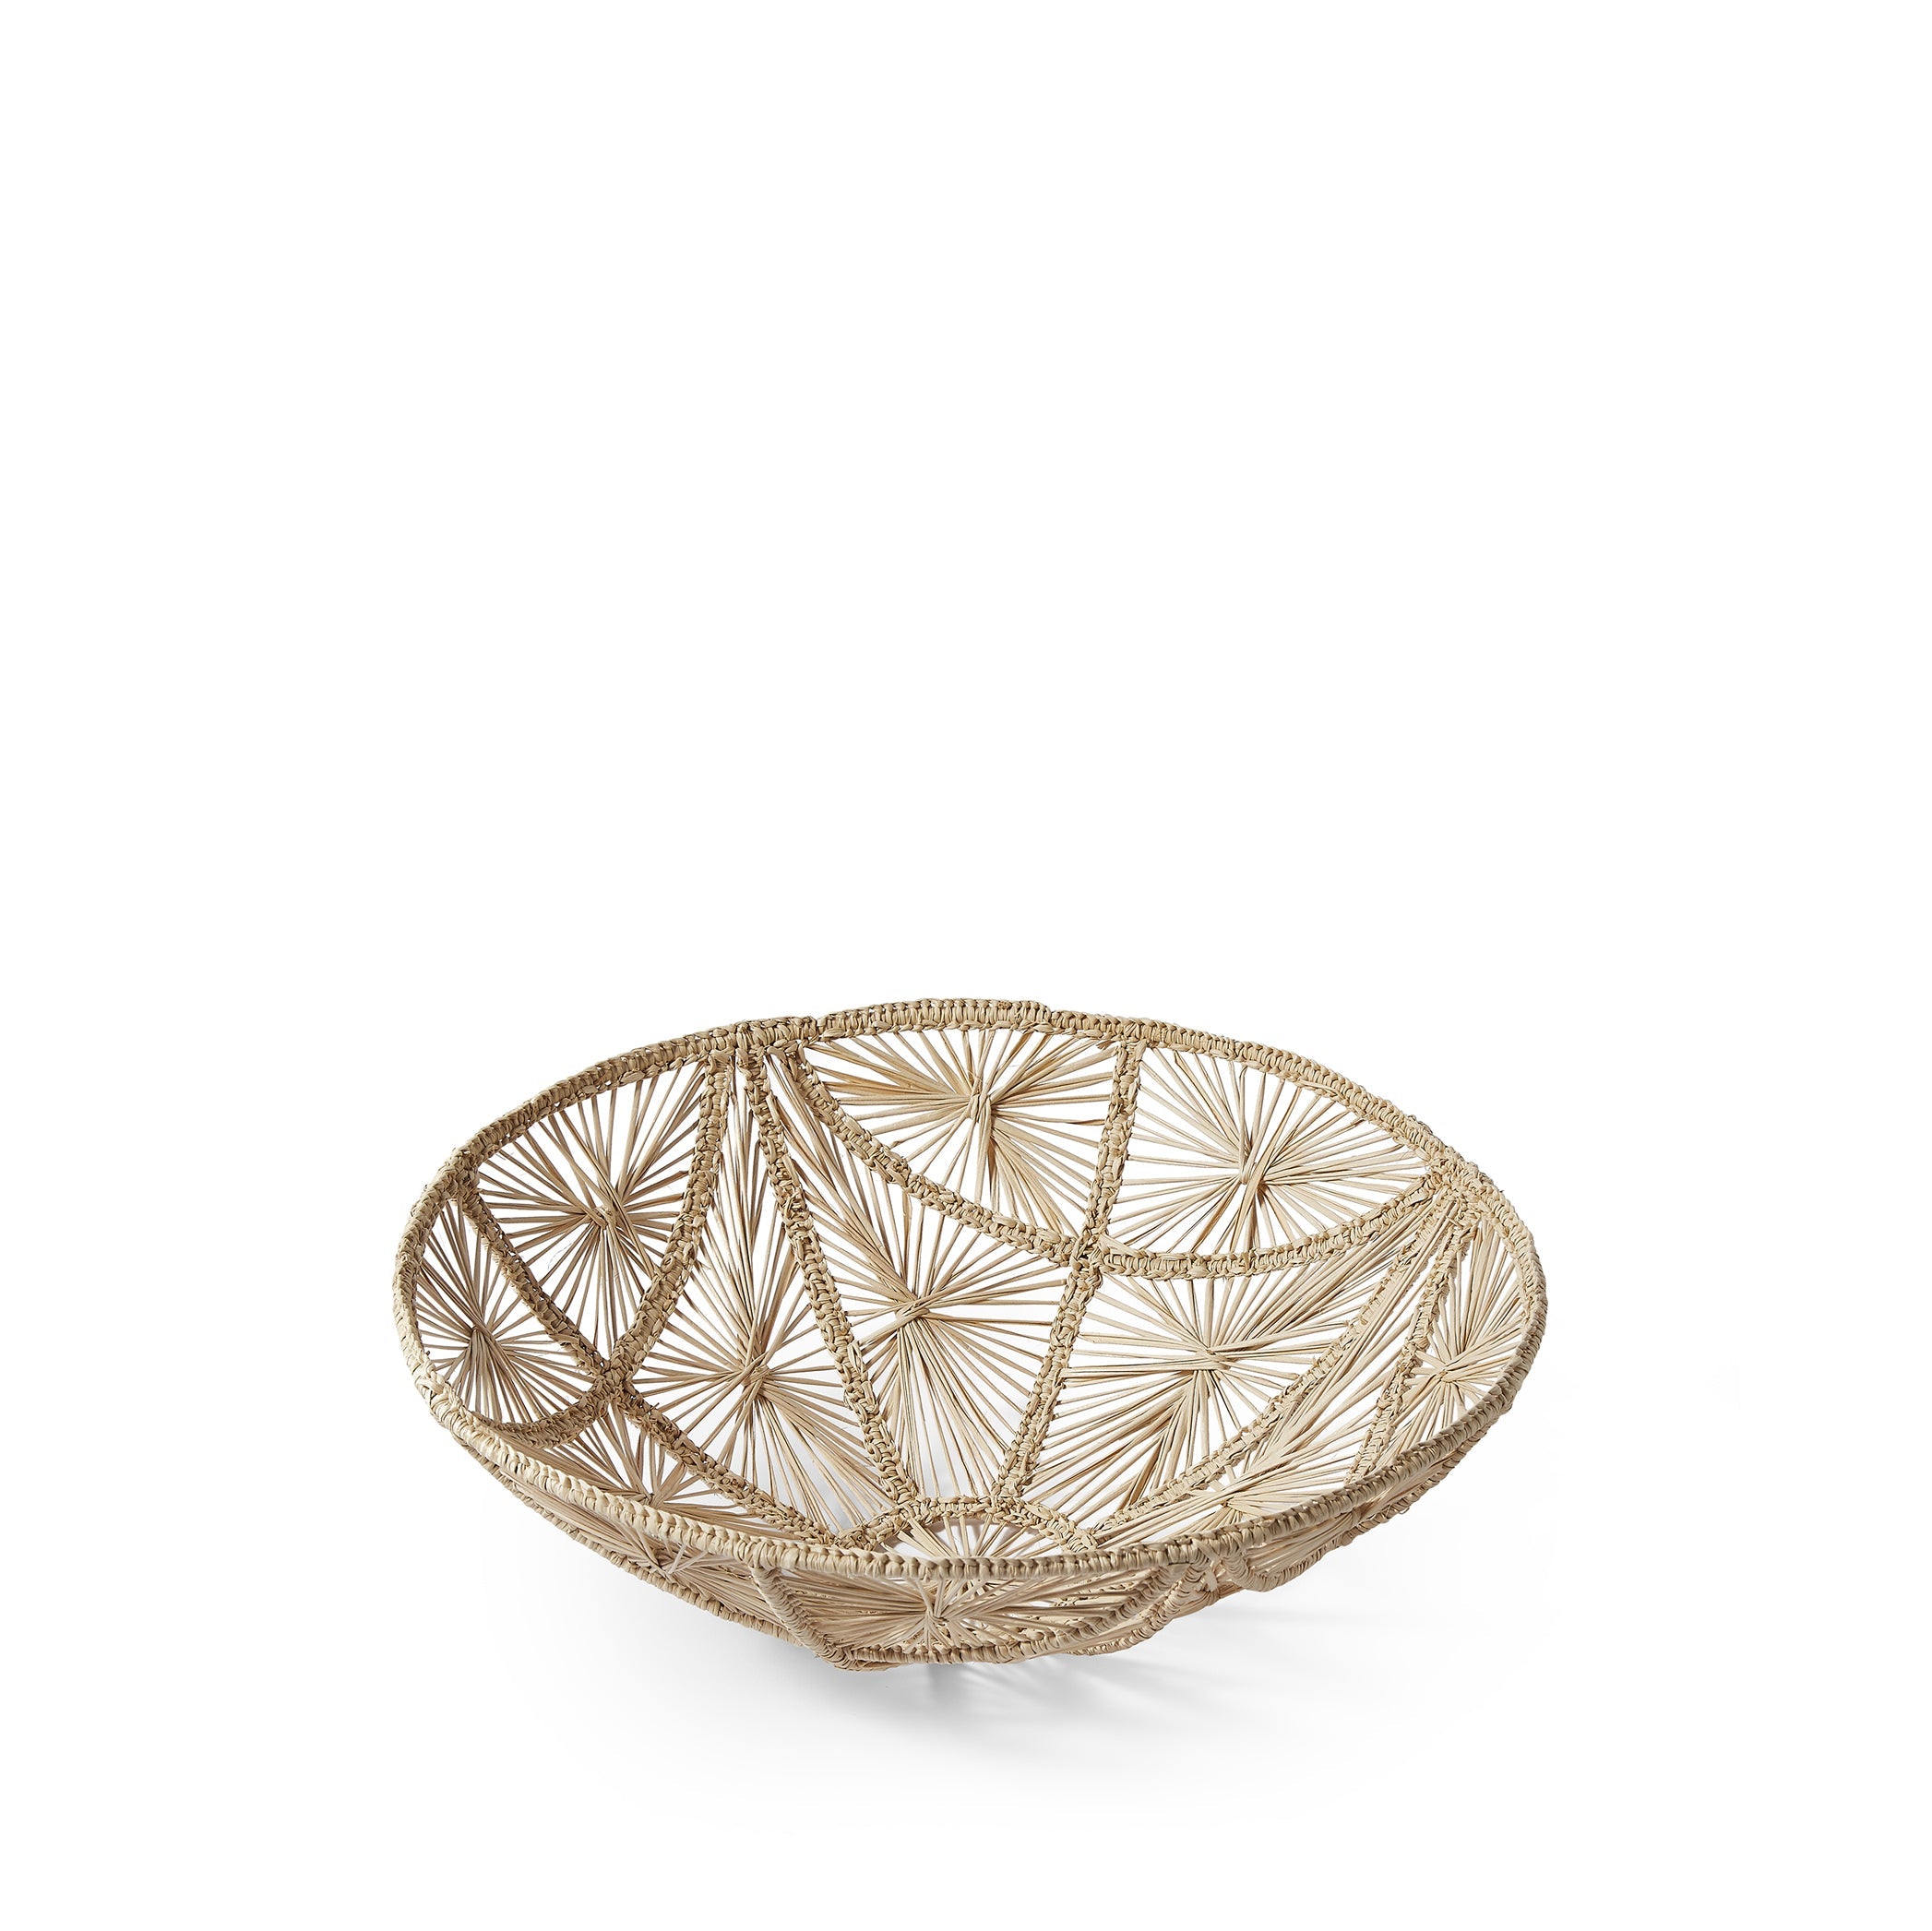 Handwoven Spider Bread Basket in Natural, 26cm